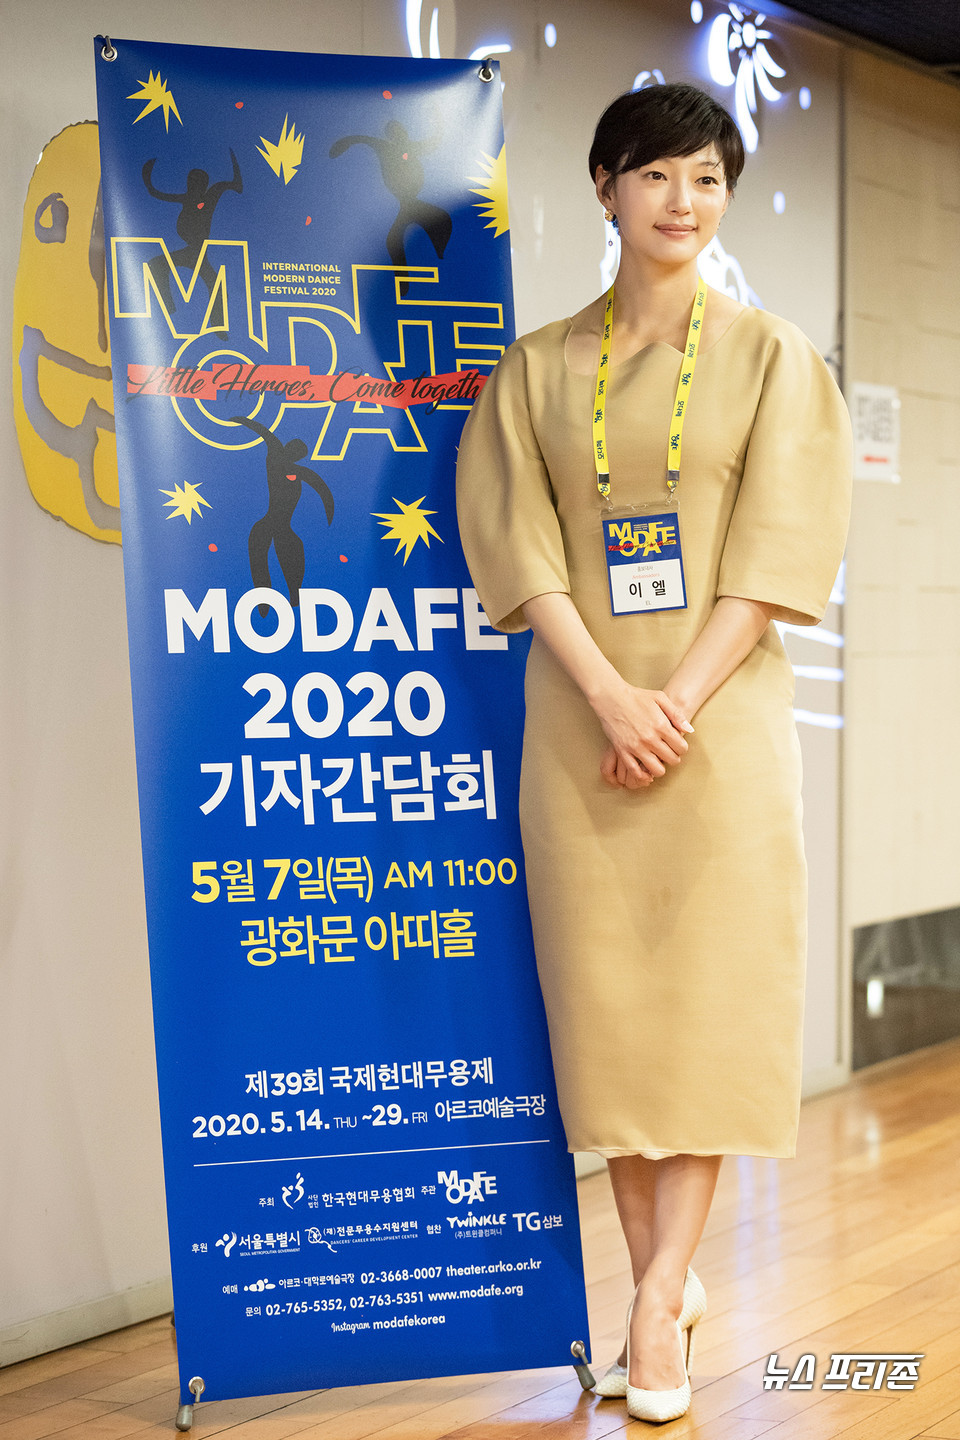 MODAFE 2020의 홍보대사로 위촉된 이엘 배우 /ⓒAejin Kwoun